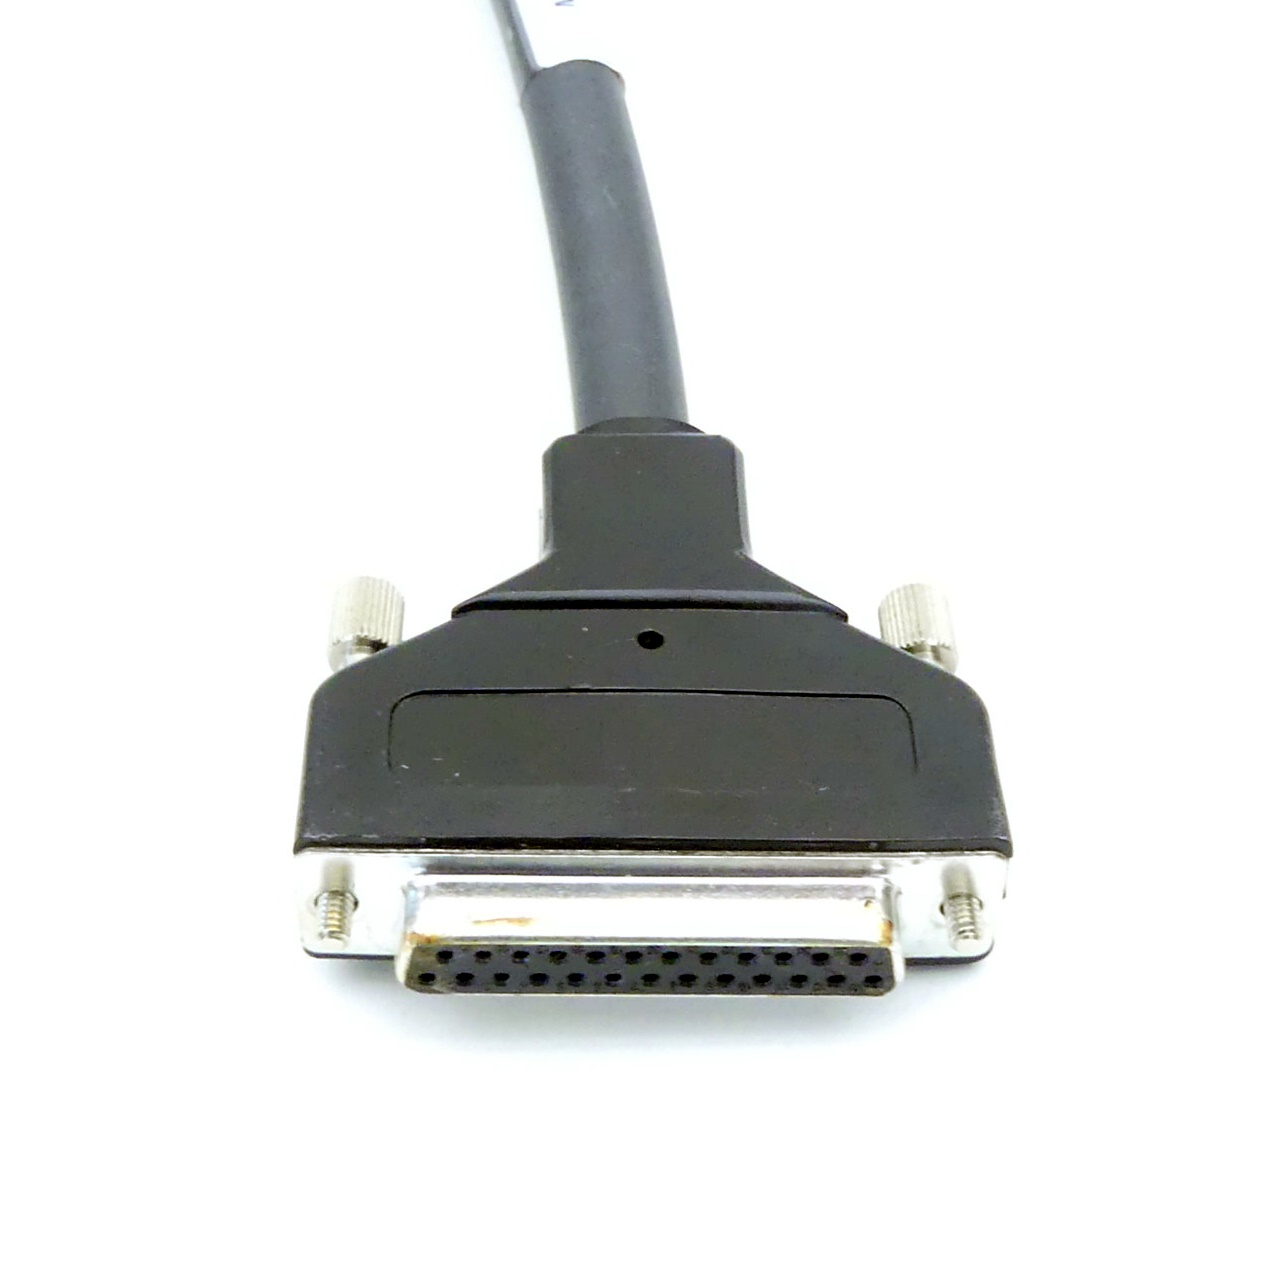 Kabel, 3 m, DB25-Stecker auf DB25-Buchse E5035B0 